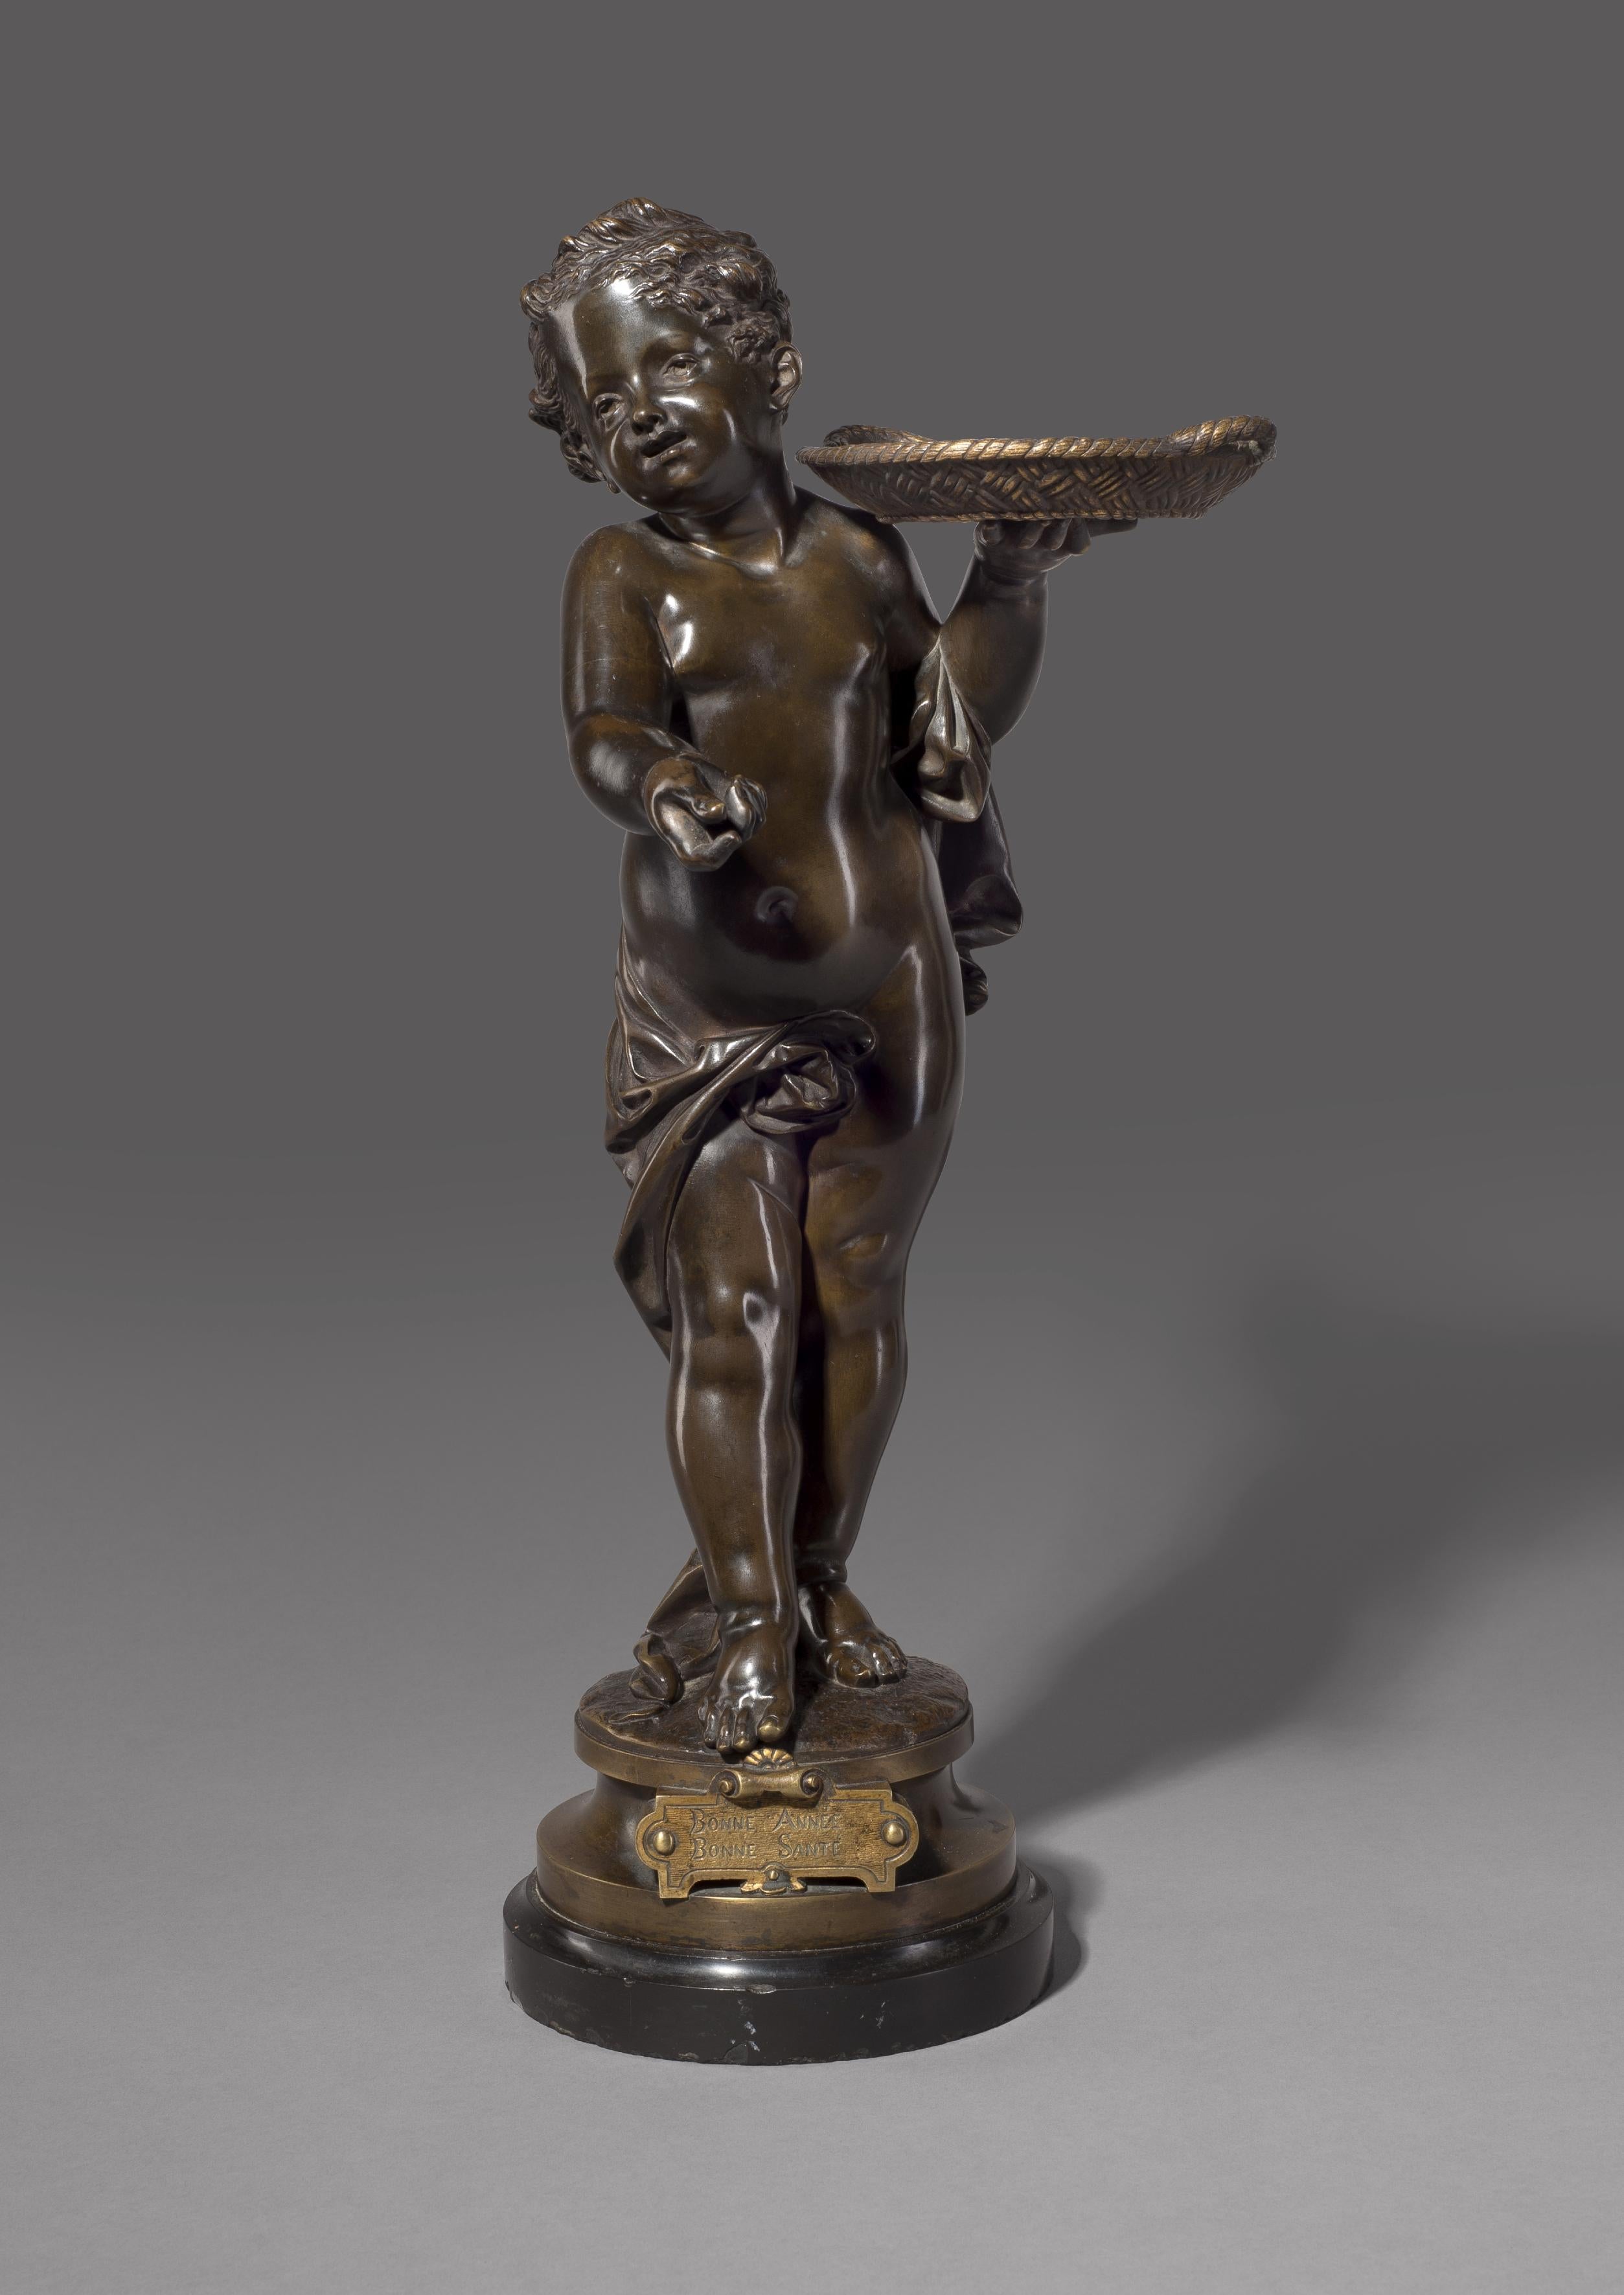 'Bonne Année, Bonne Santé' -A fine patinated bronze figure by Adolphe Maubach.

French, circa 1900. 

Signed 'Adolphe Maurbach' and bearing a gilt-bronze title plaque 'Bonne Année, Bonne Santé'.